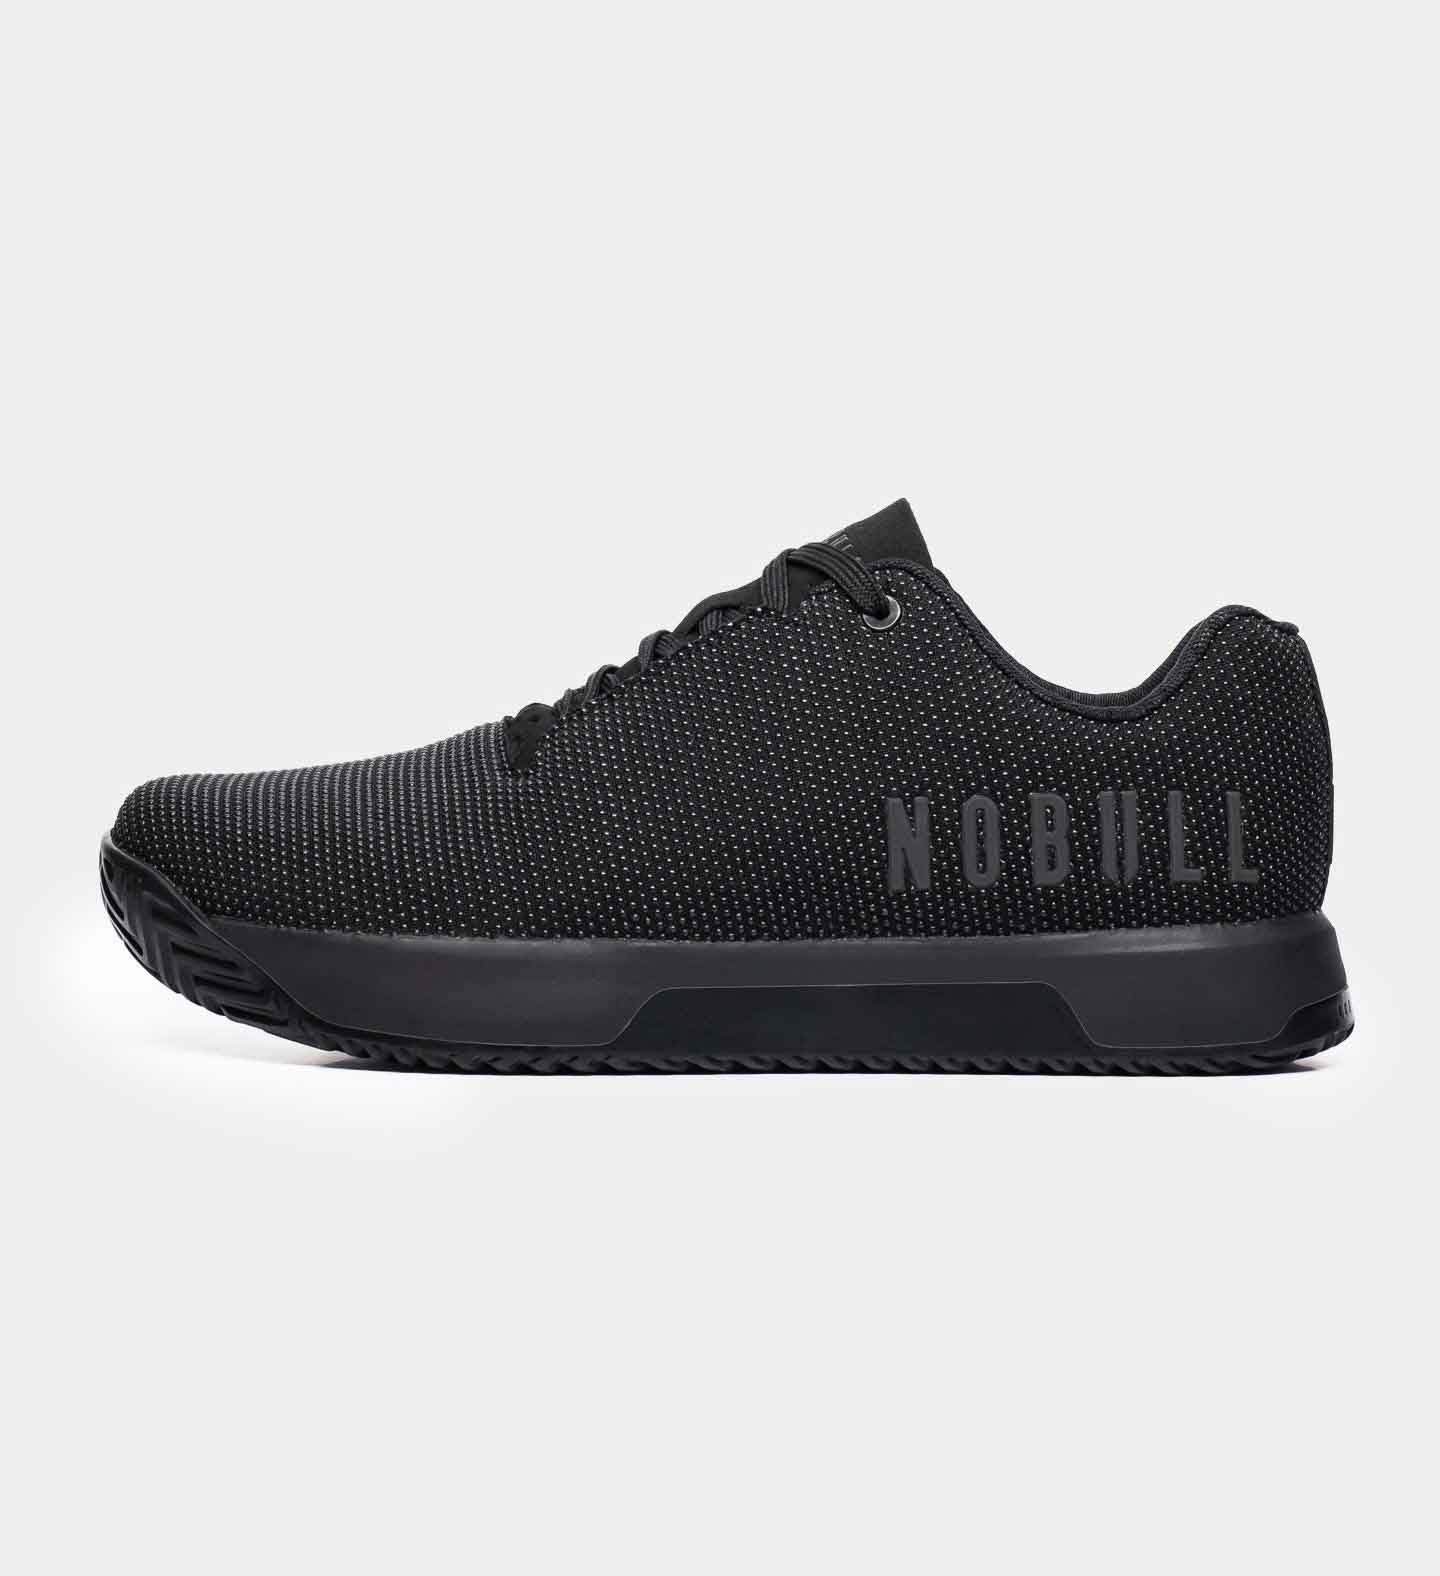 MEN'S BLACK NOBULL IMPACT | Men's Black Training Shoes | NOBULL